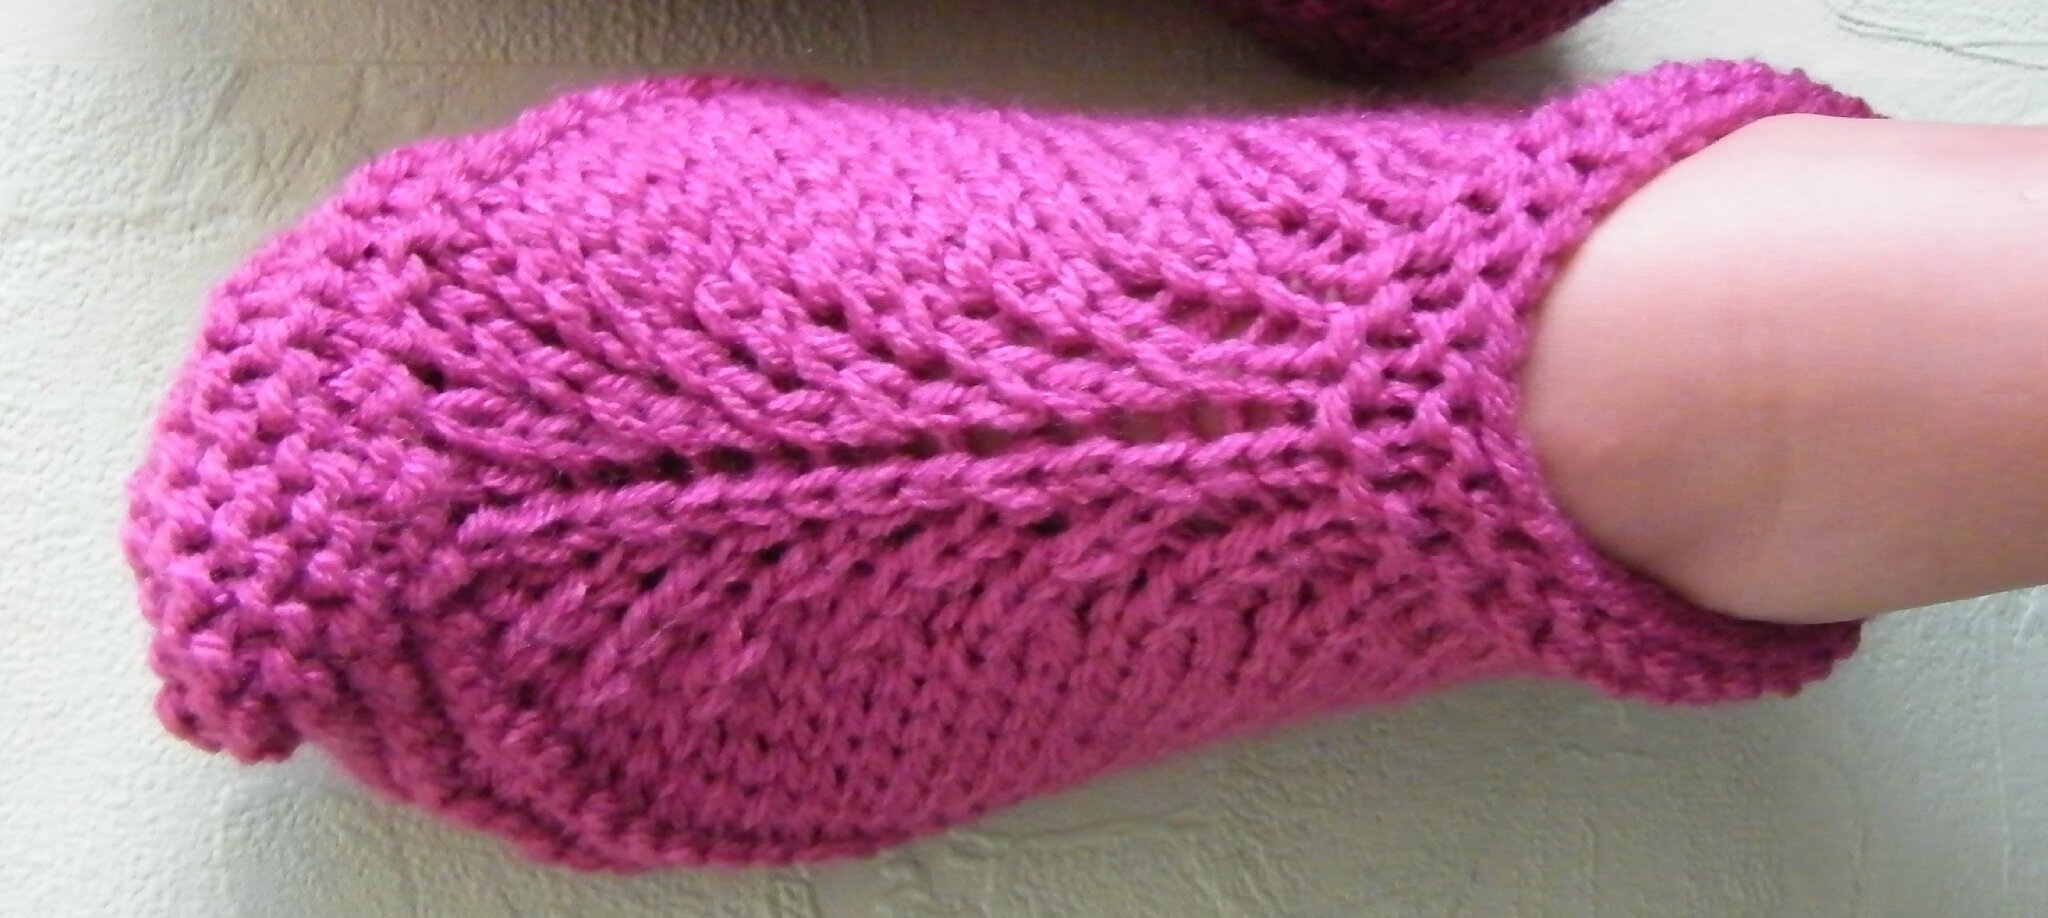 modele de chausson a tricoter